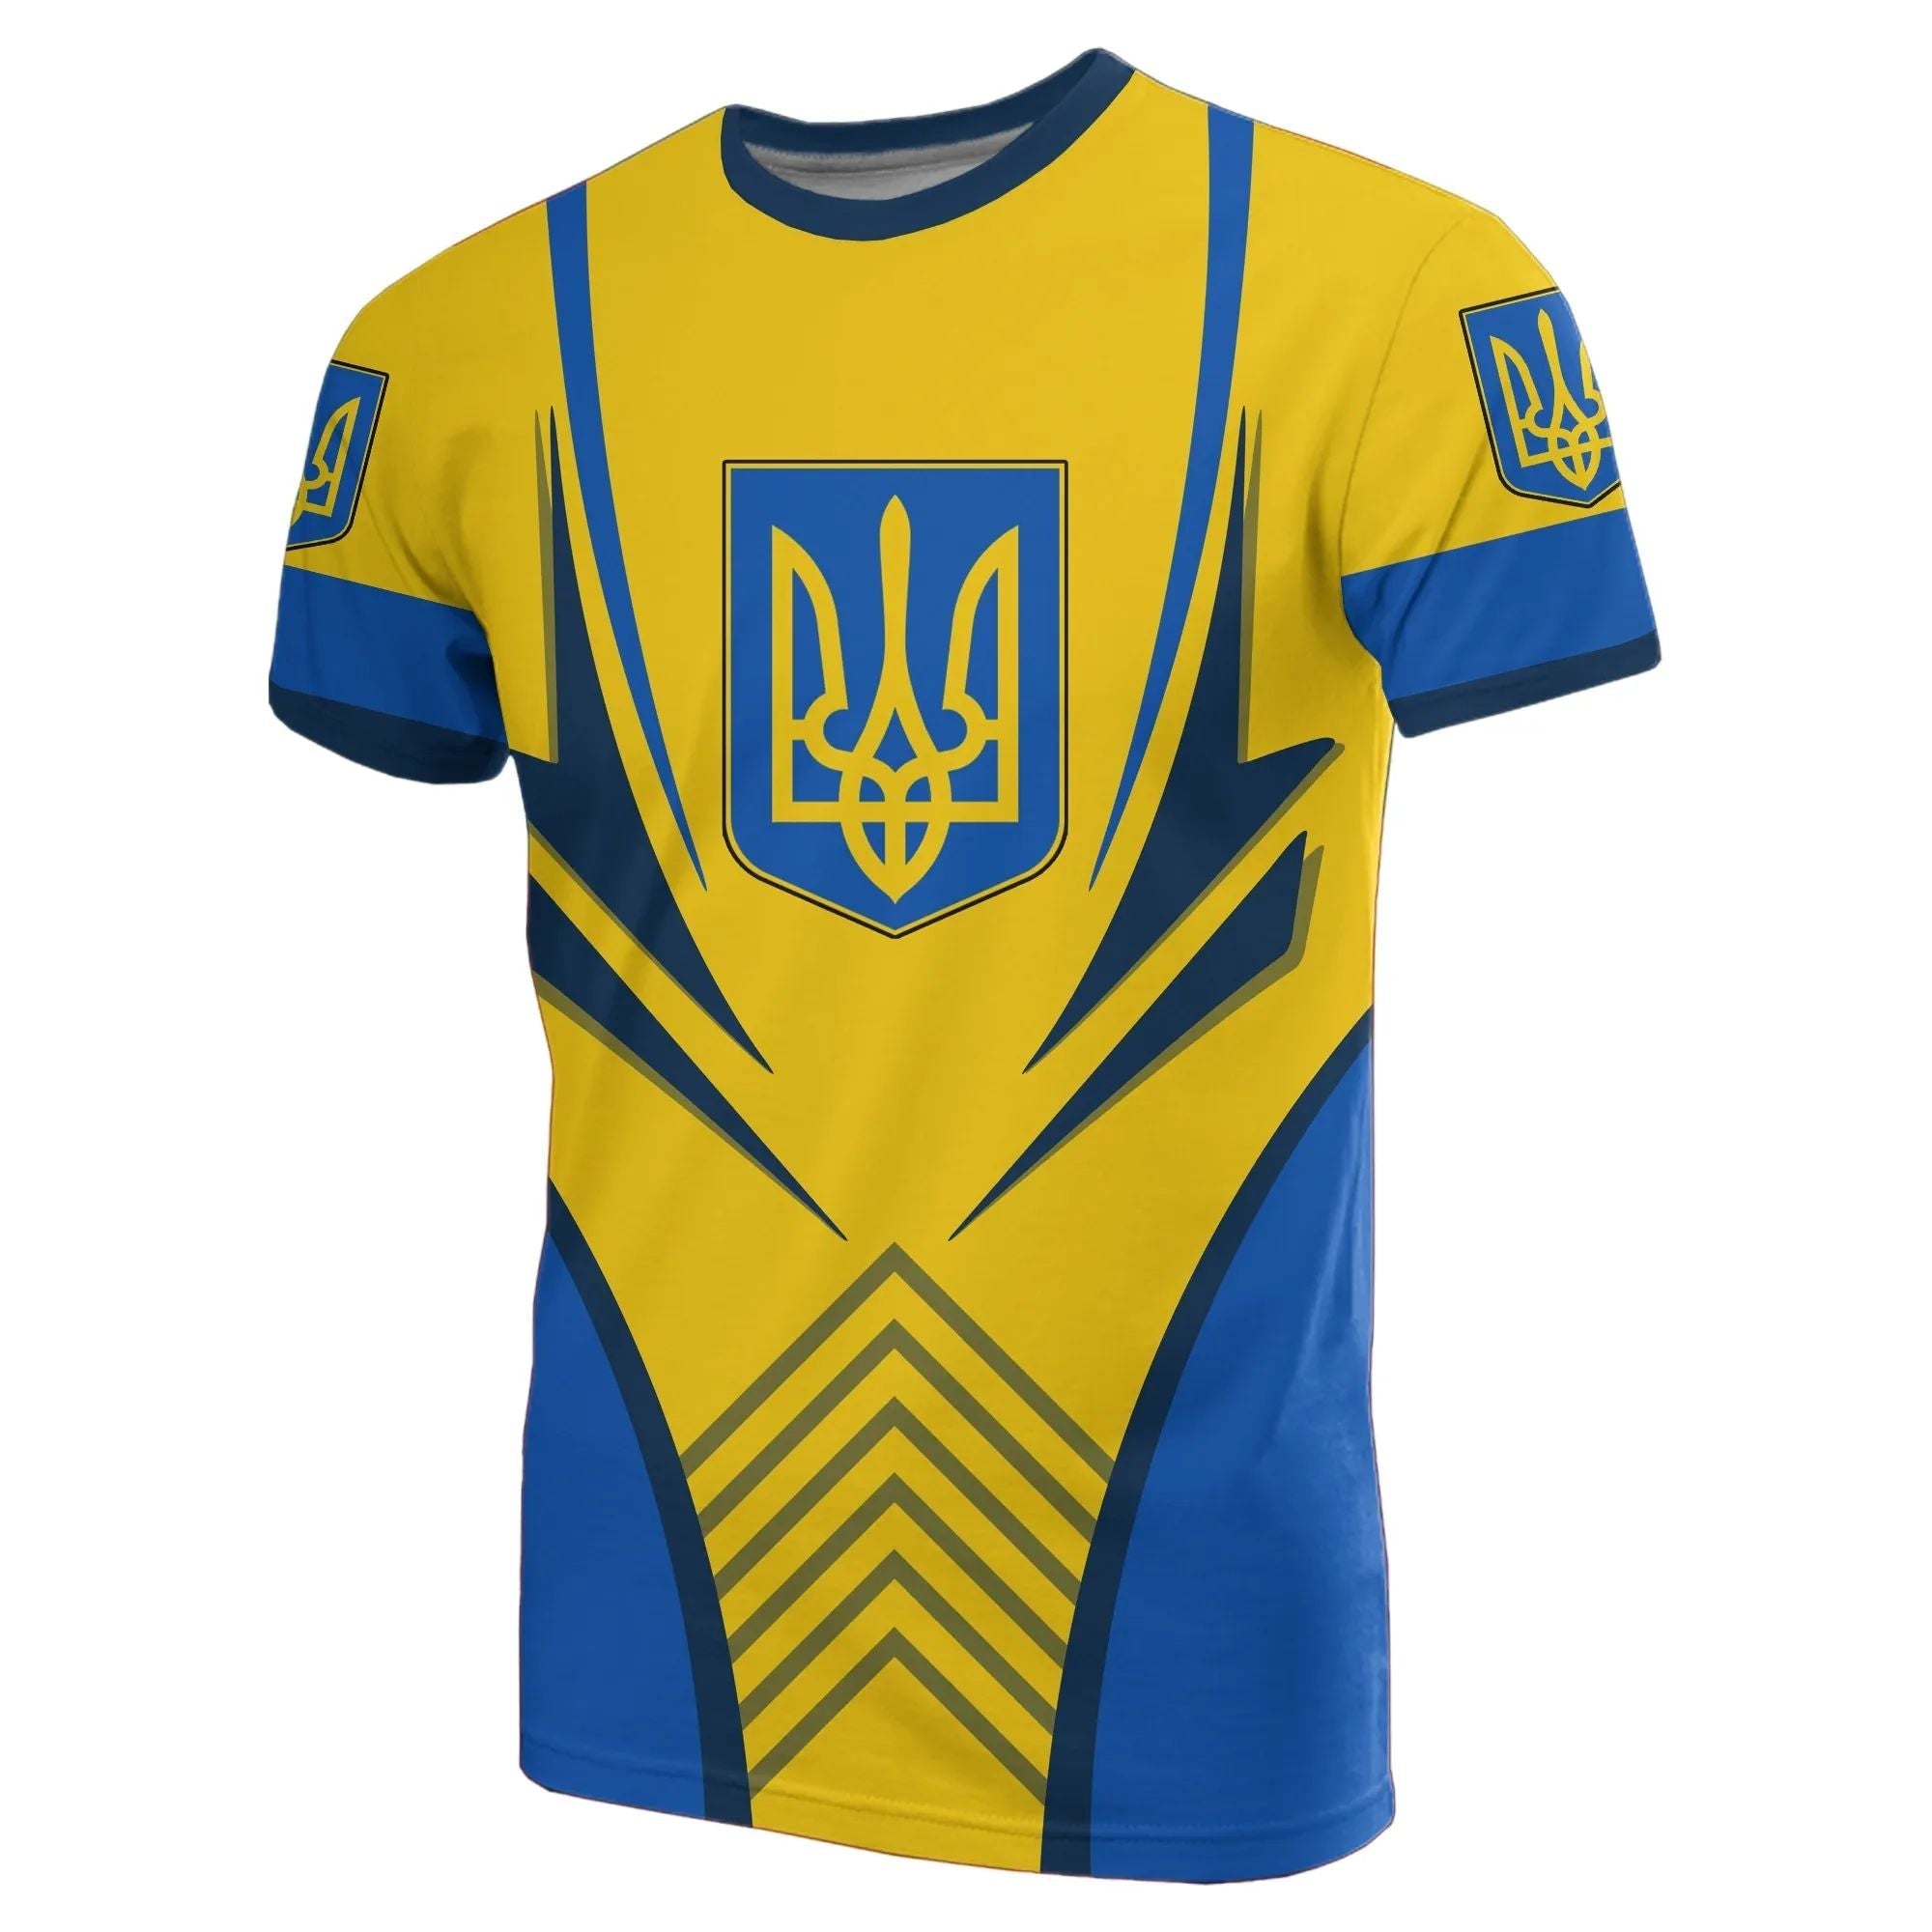 ukraine-coat-of-arms-t-shirt